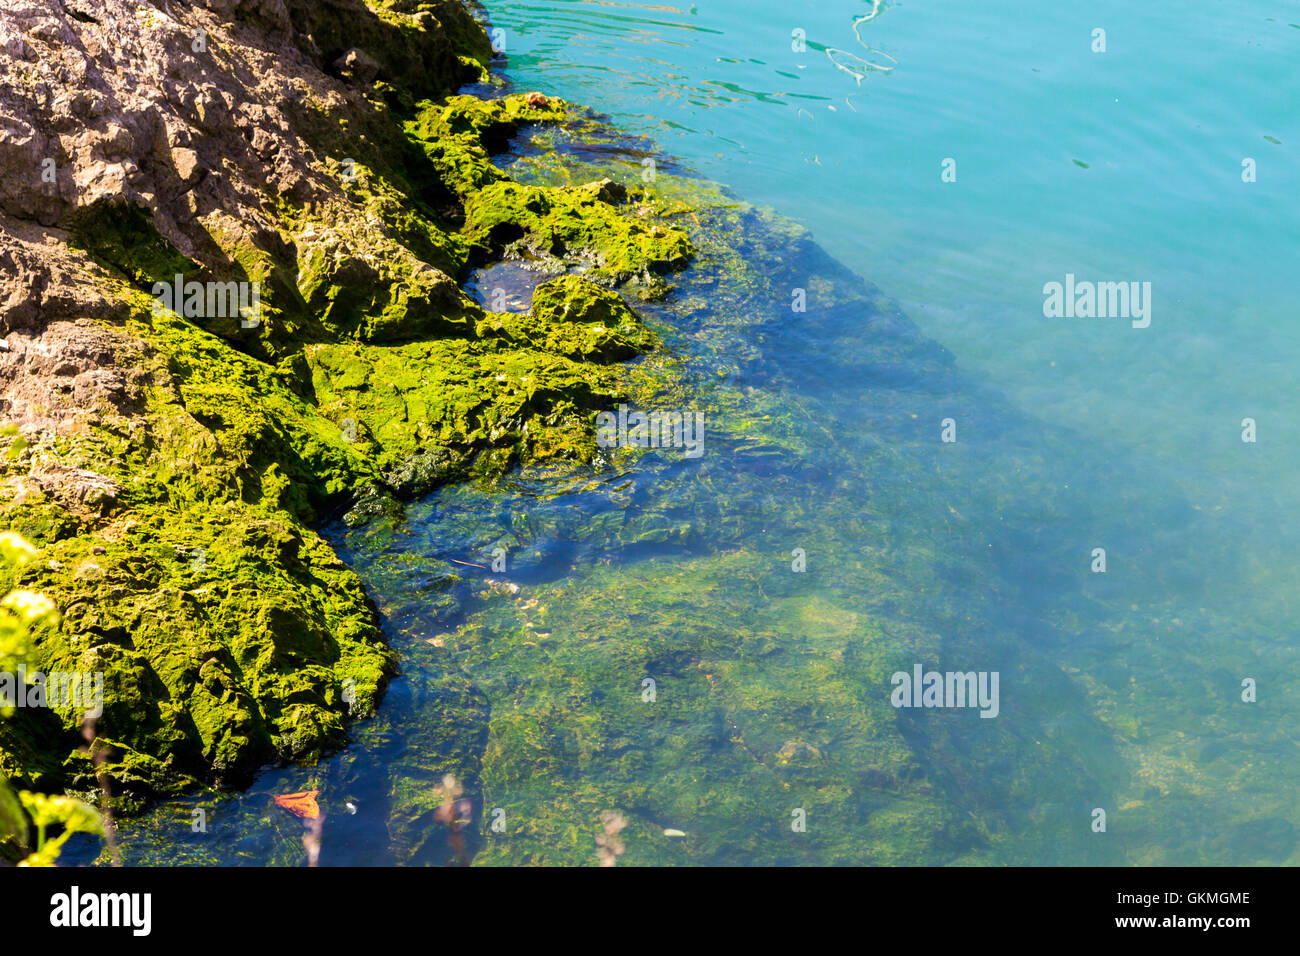 Kristallklares blaues Wasser entlang Felsen mit Algen Stockfoto